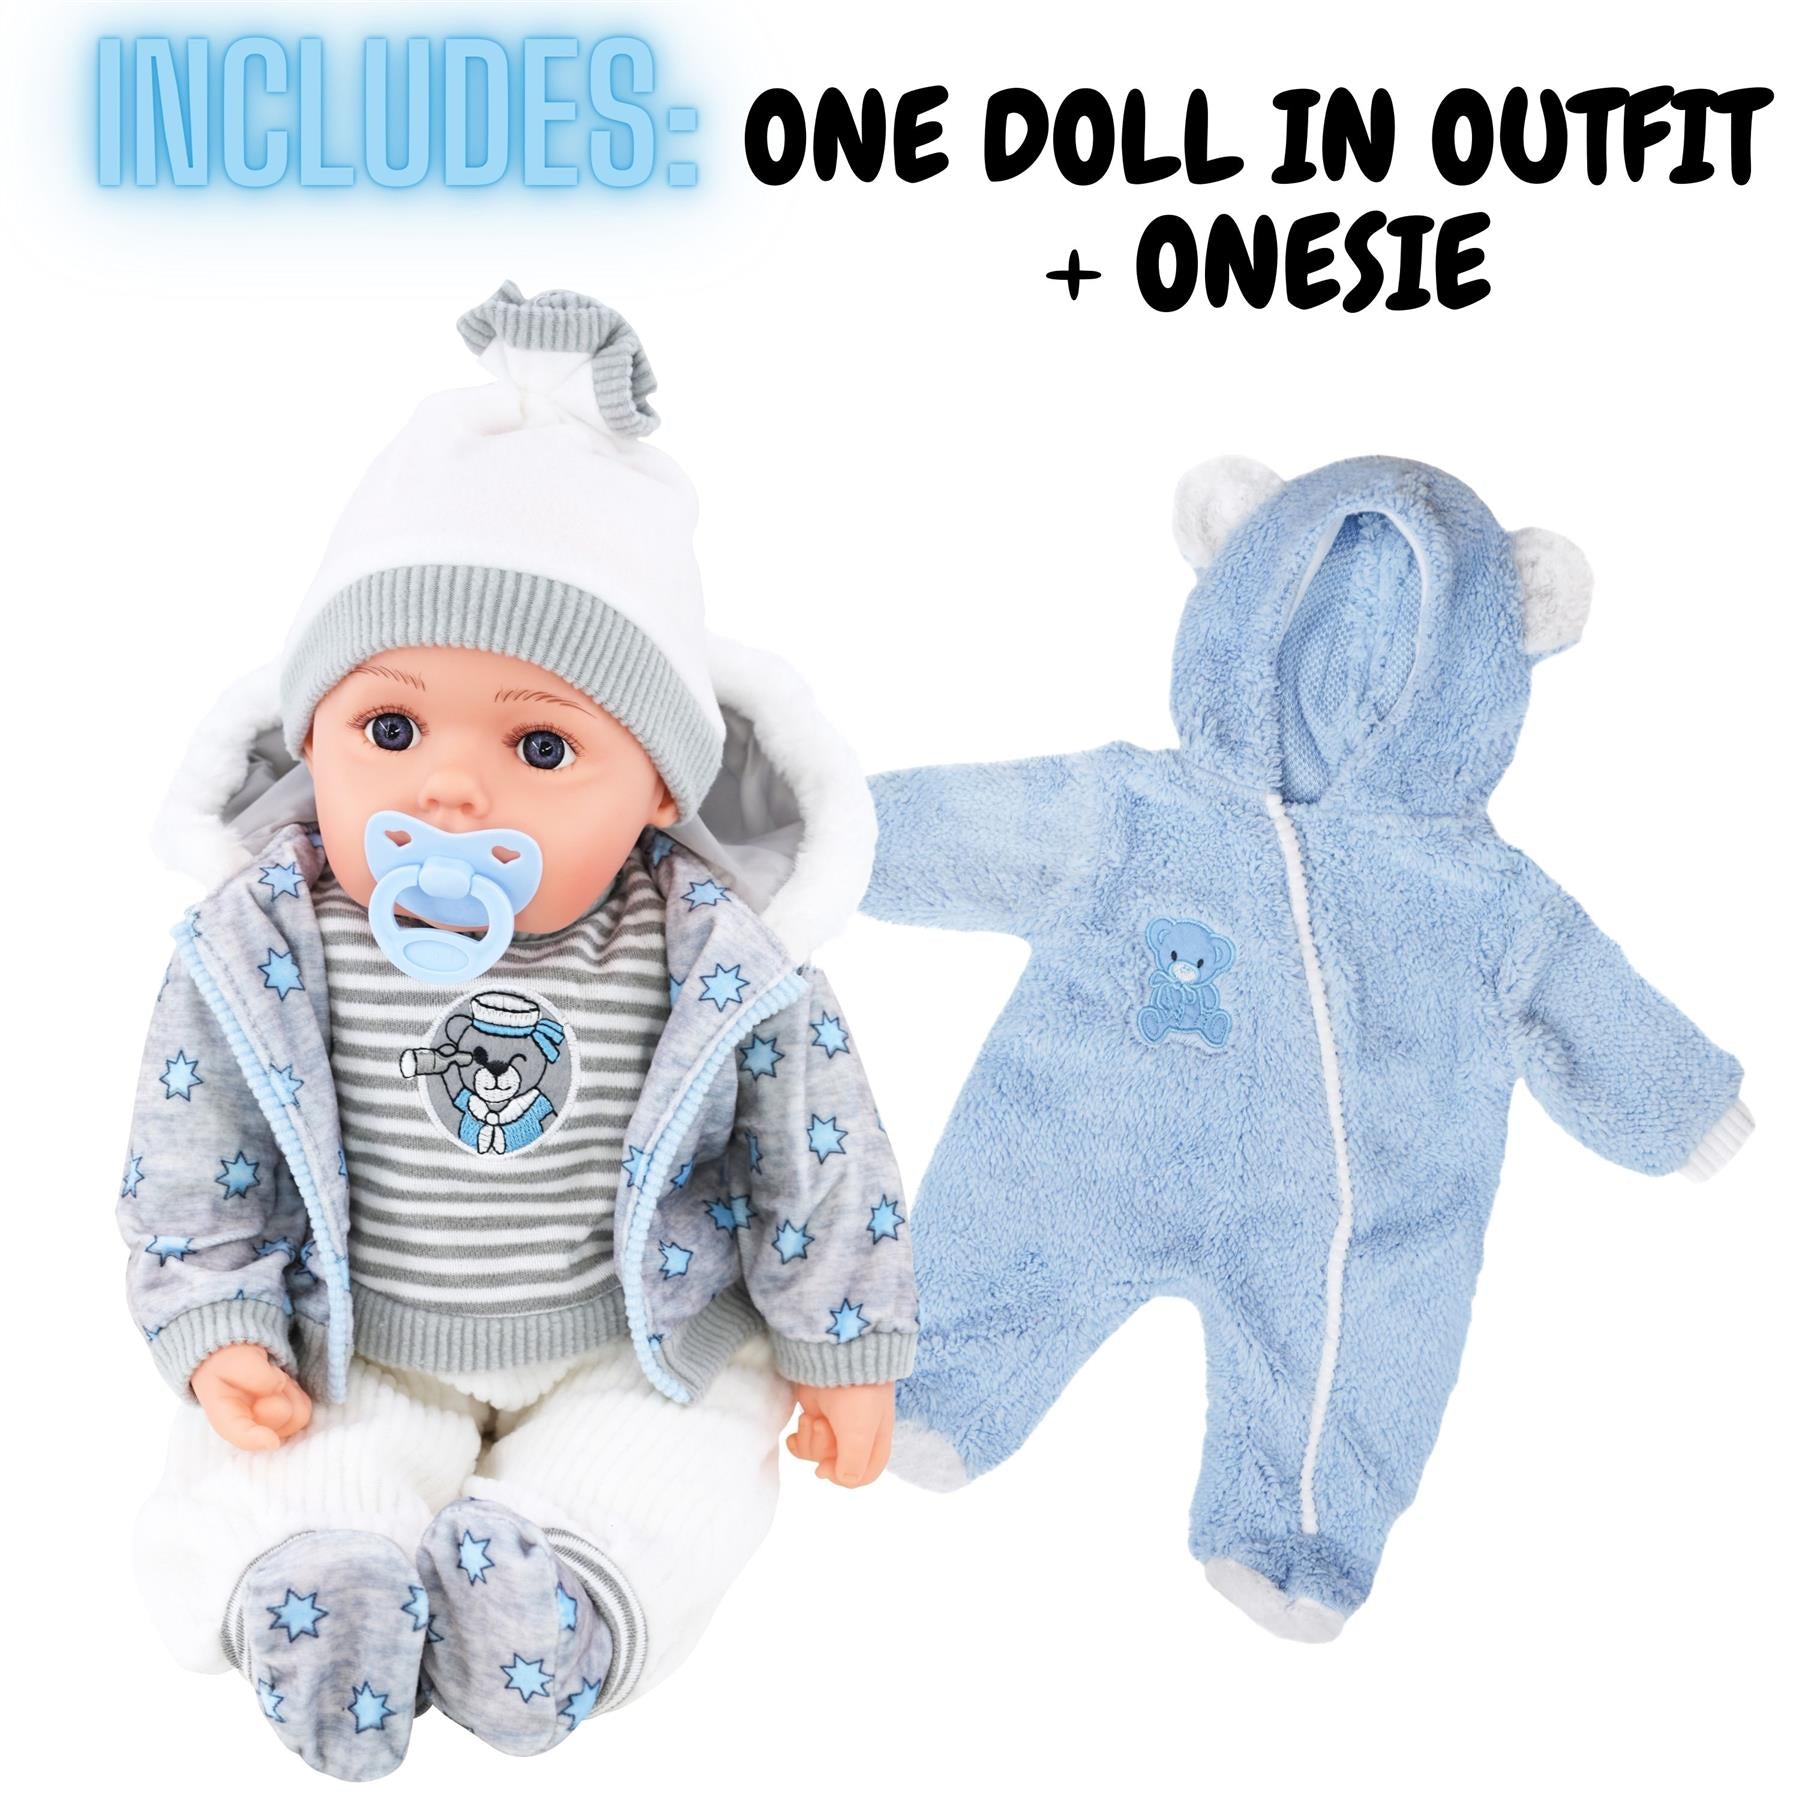 Grey Bibi Baby Doll + Extra Outfit by BiBi Doll - UKBuyZone